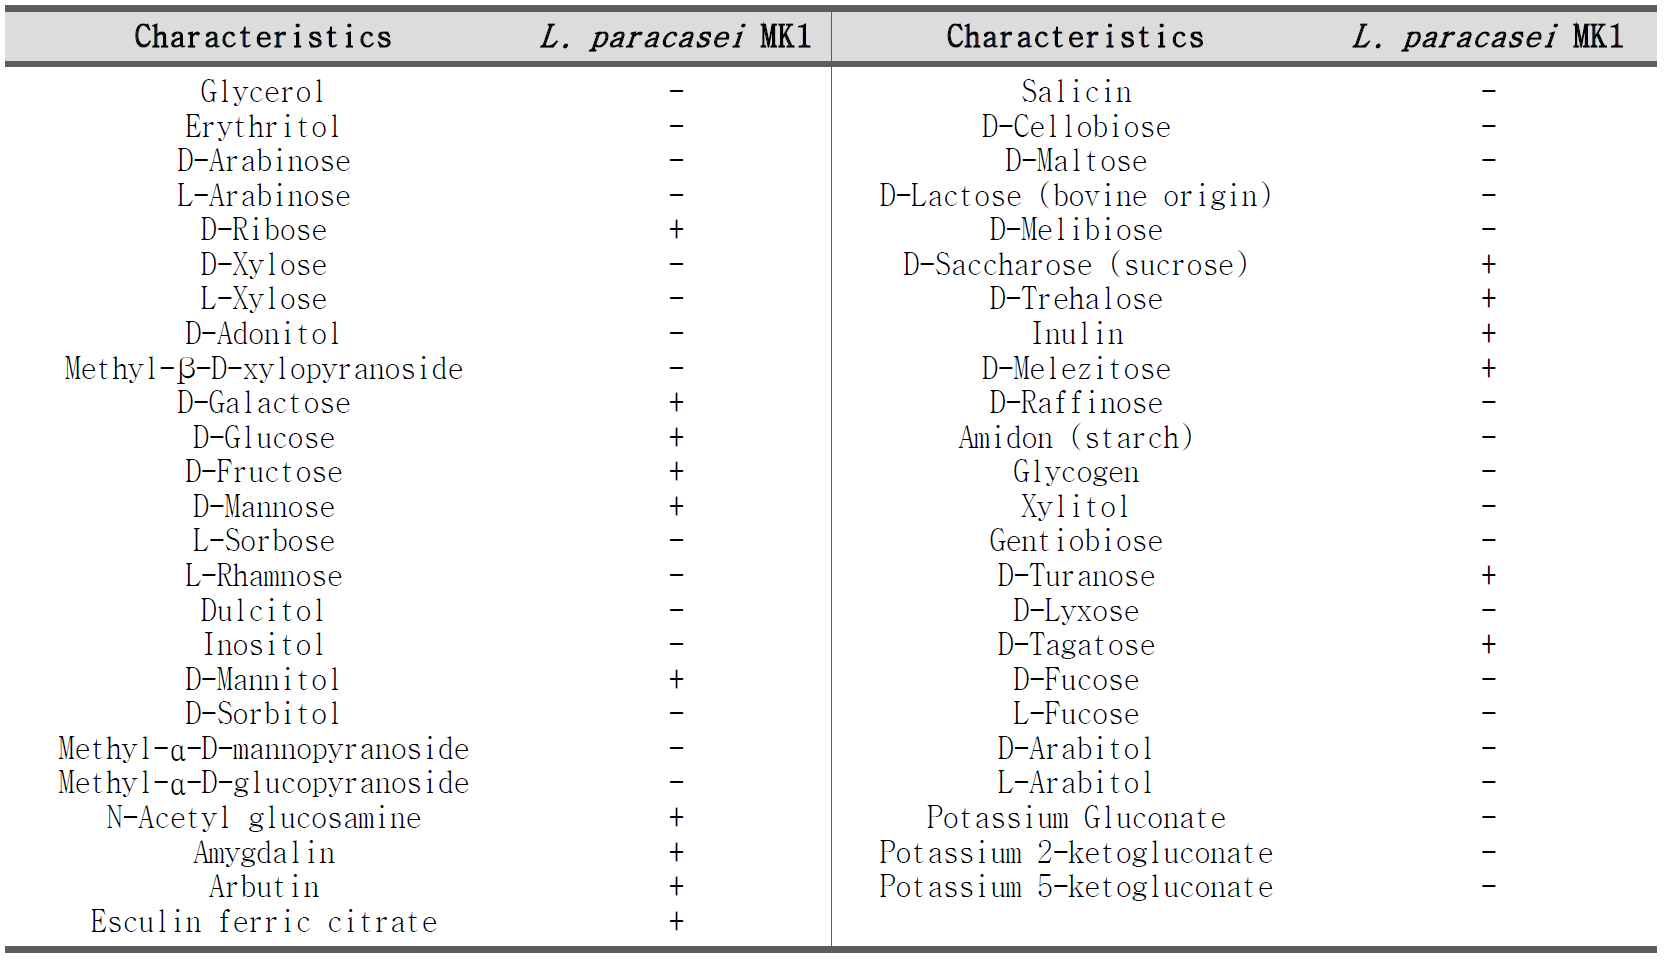 Biochemical characteristics of L. paracasei MK1 by API CHL50 kit